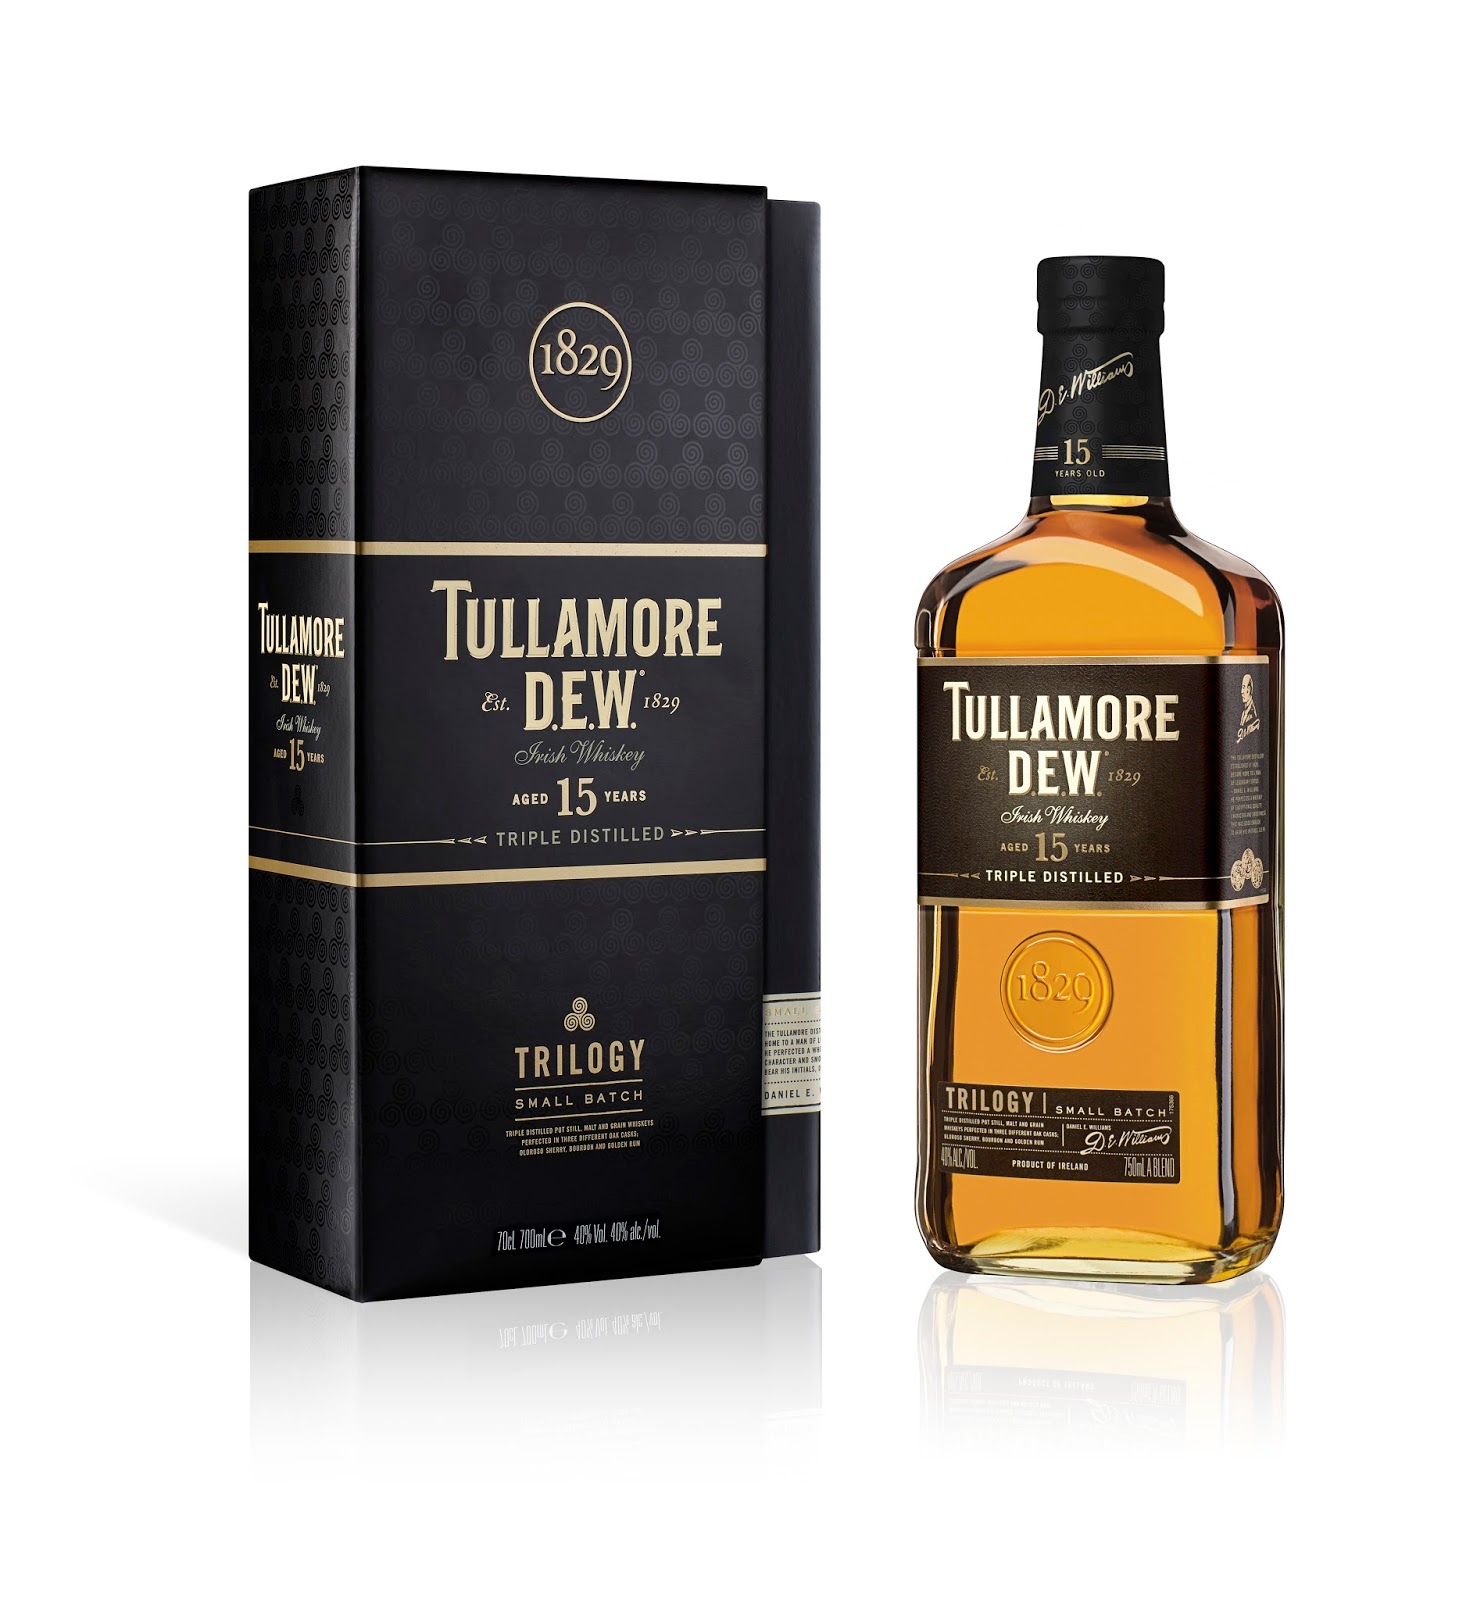 Trilogy Dew Old Liquid Tullamore 15-Year Irish: